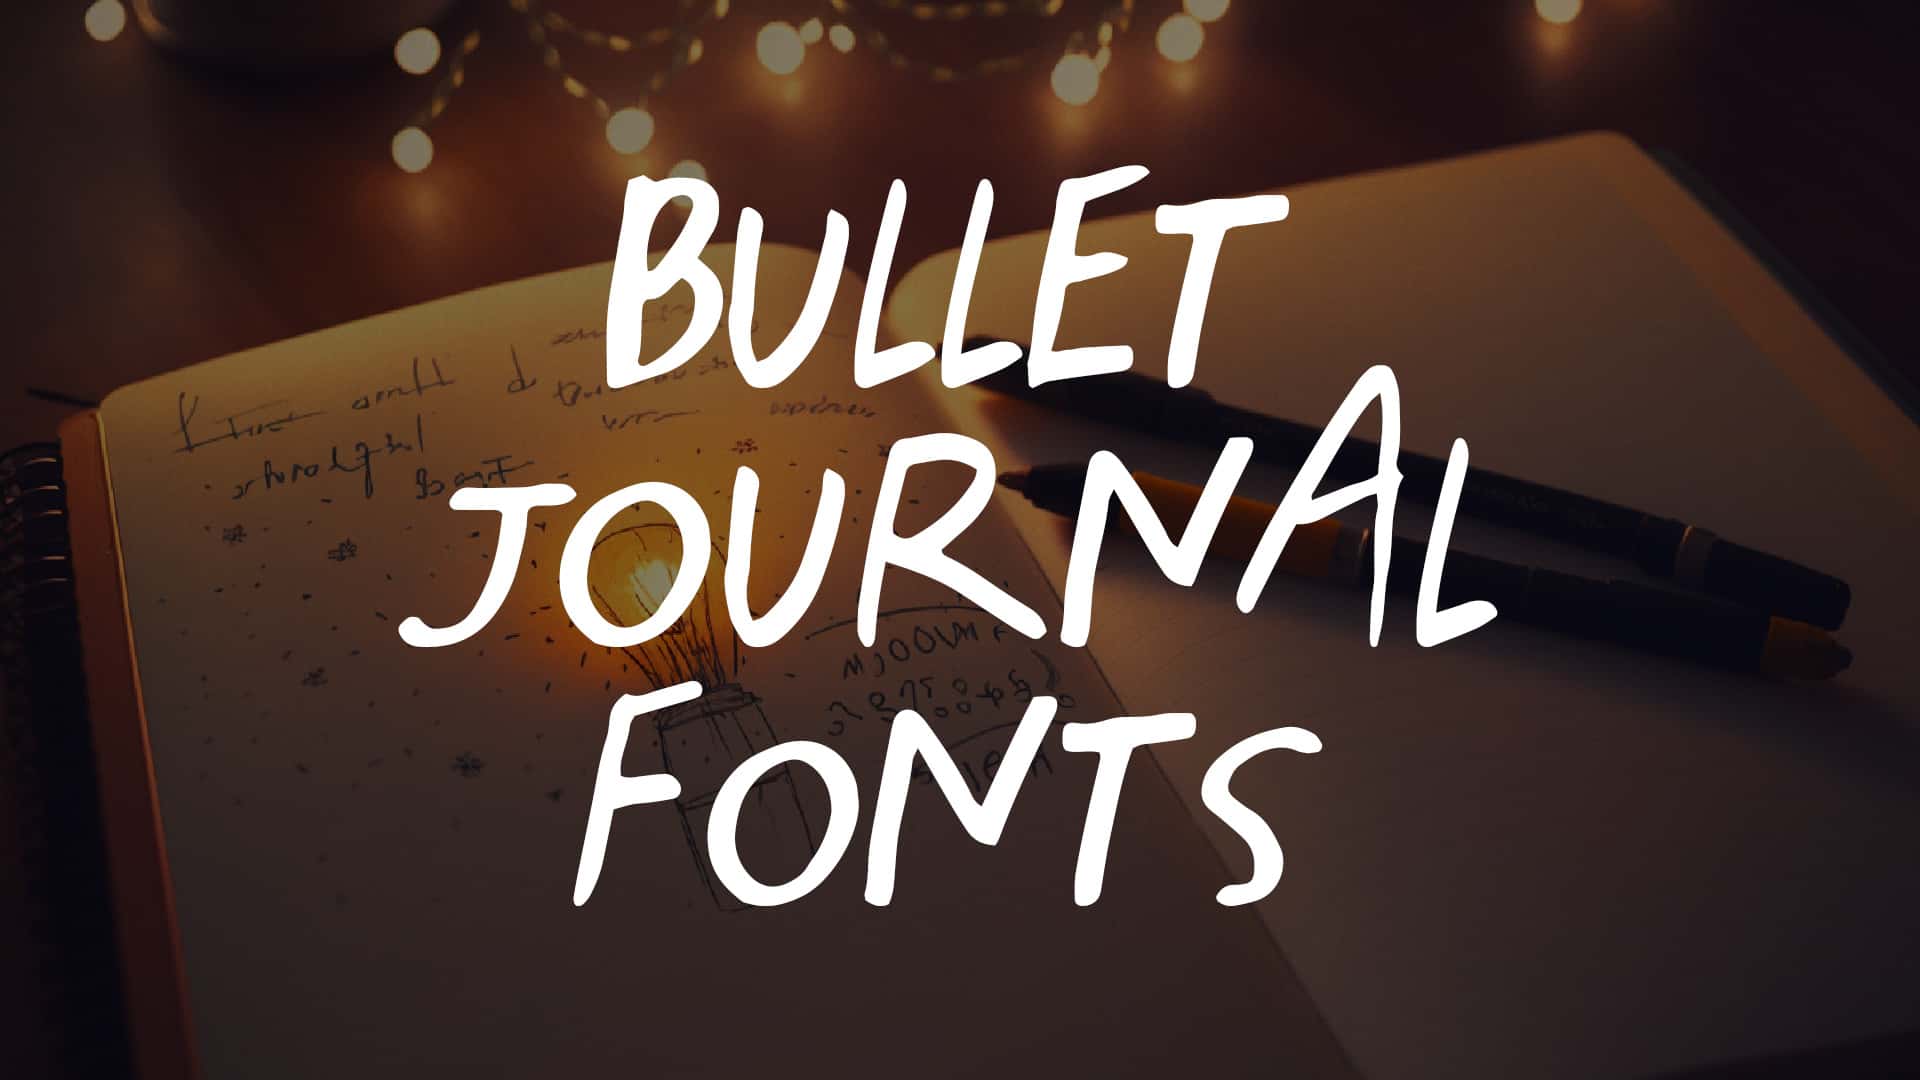 Bullet Journal Fonts